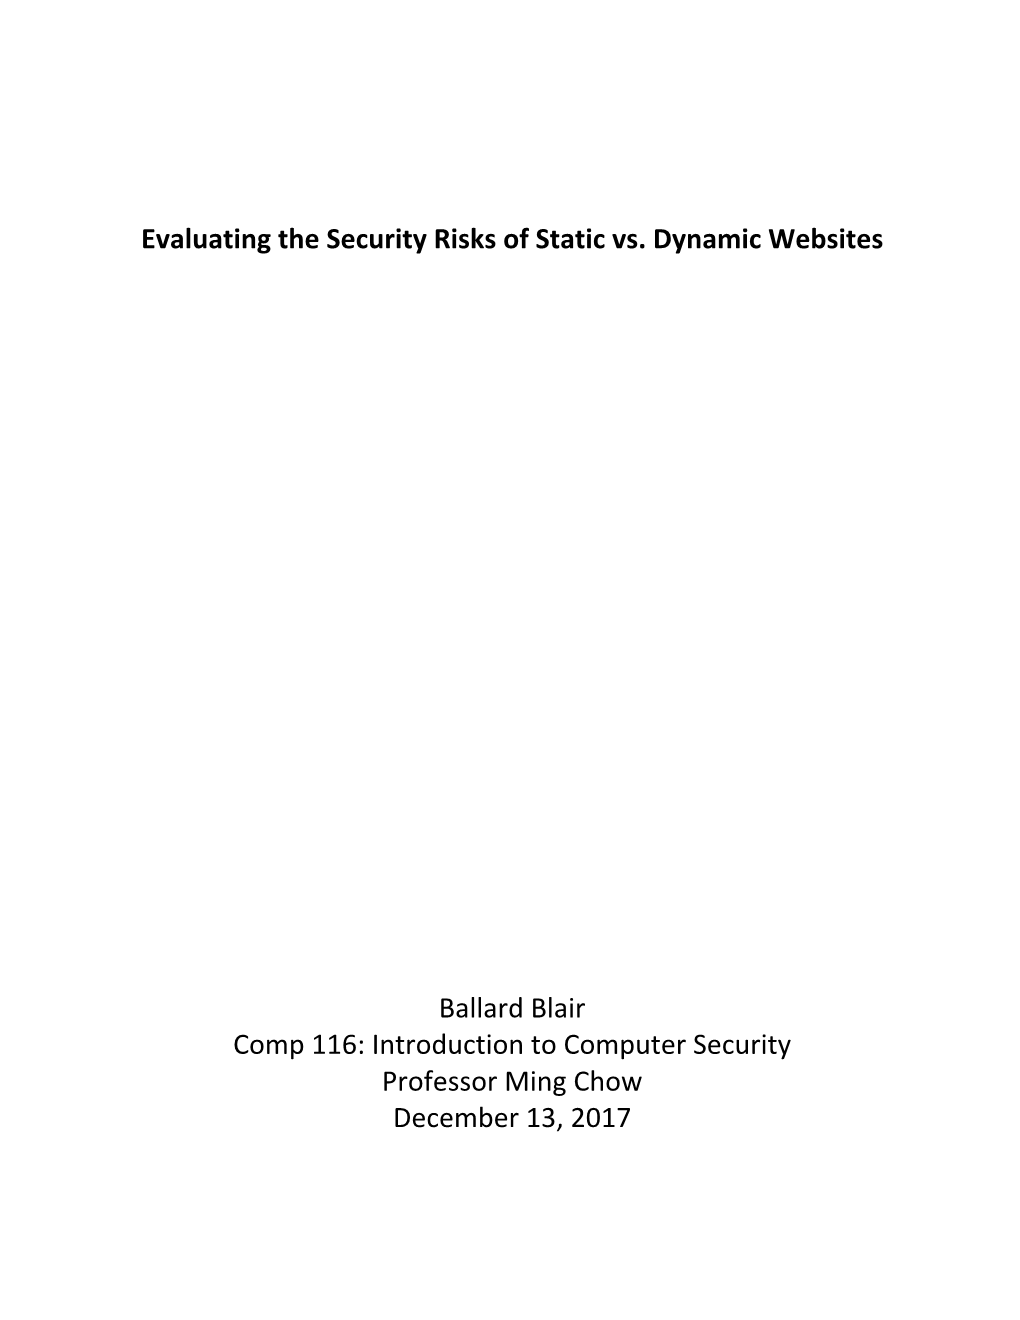 Evaluating the Security Risks of Static Vs. Dynamic Websites Ballard Blair